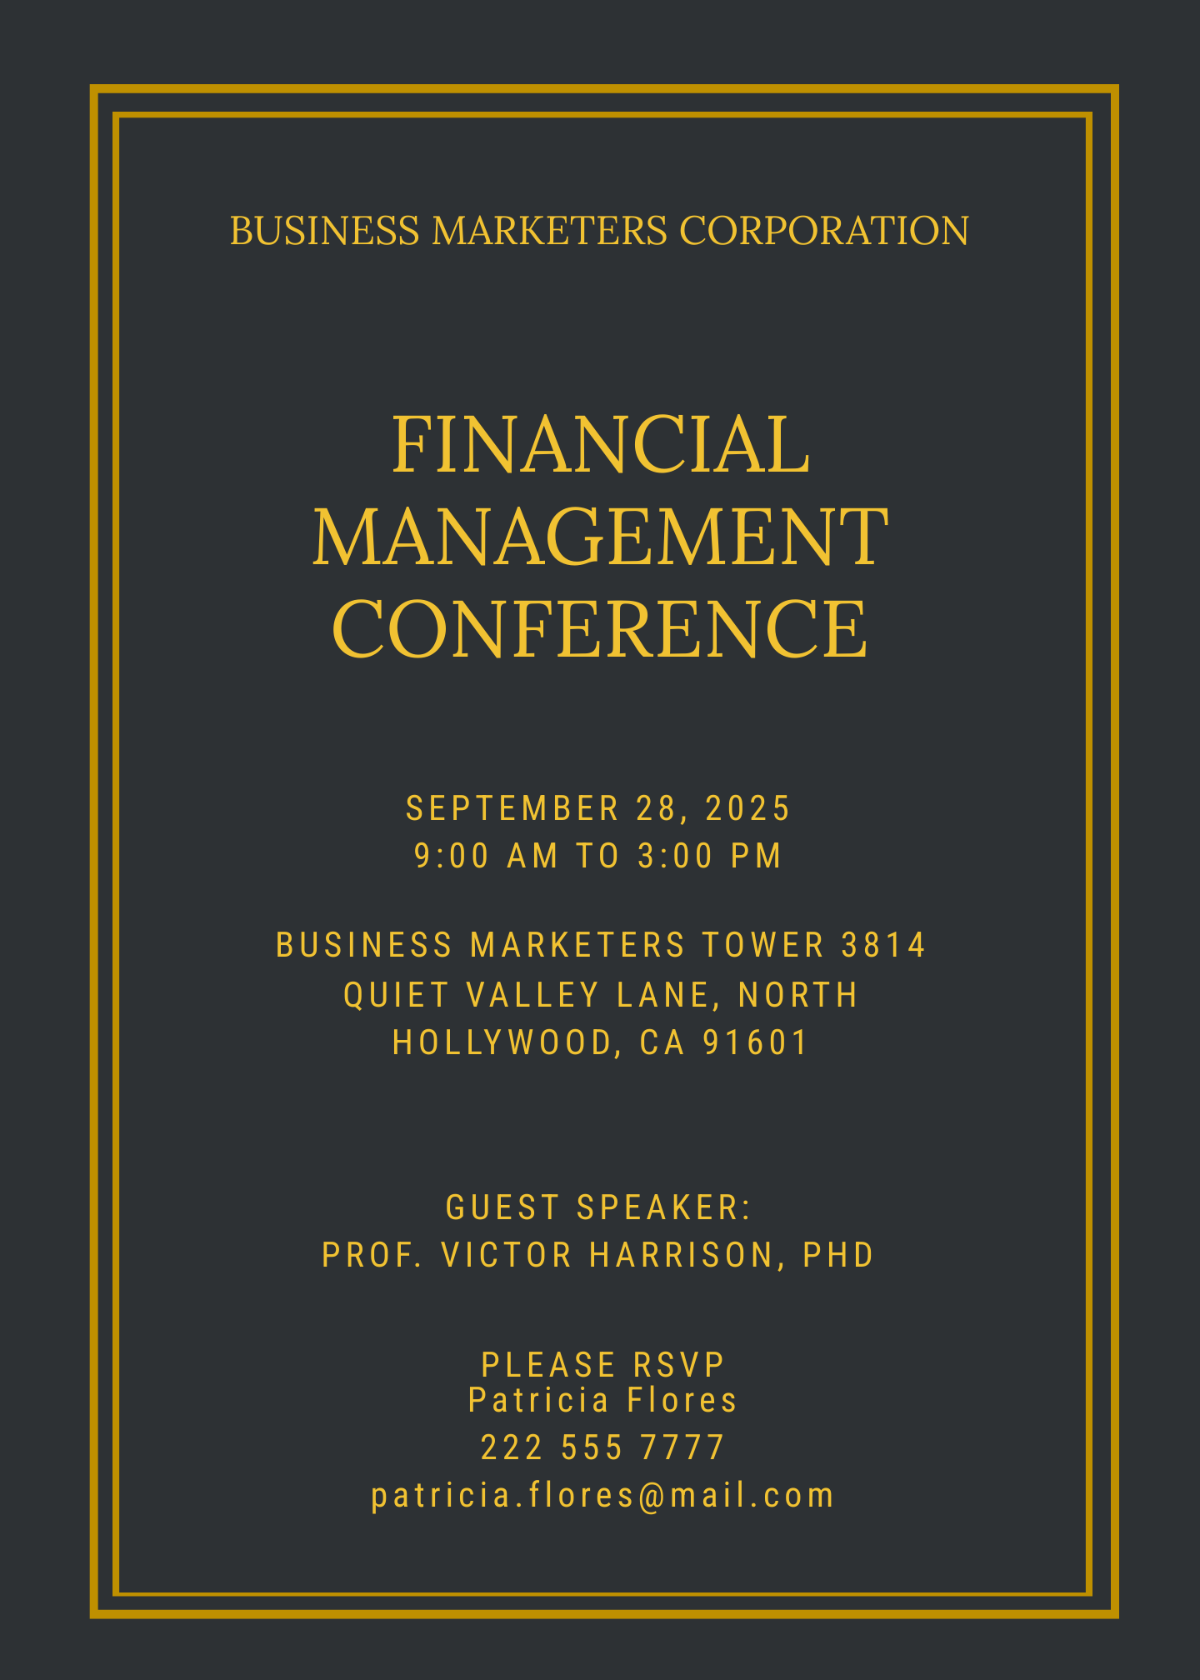 Financial Seminar Invitation